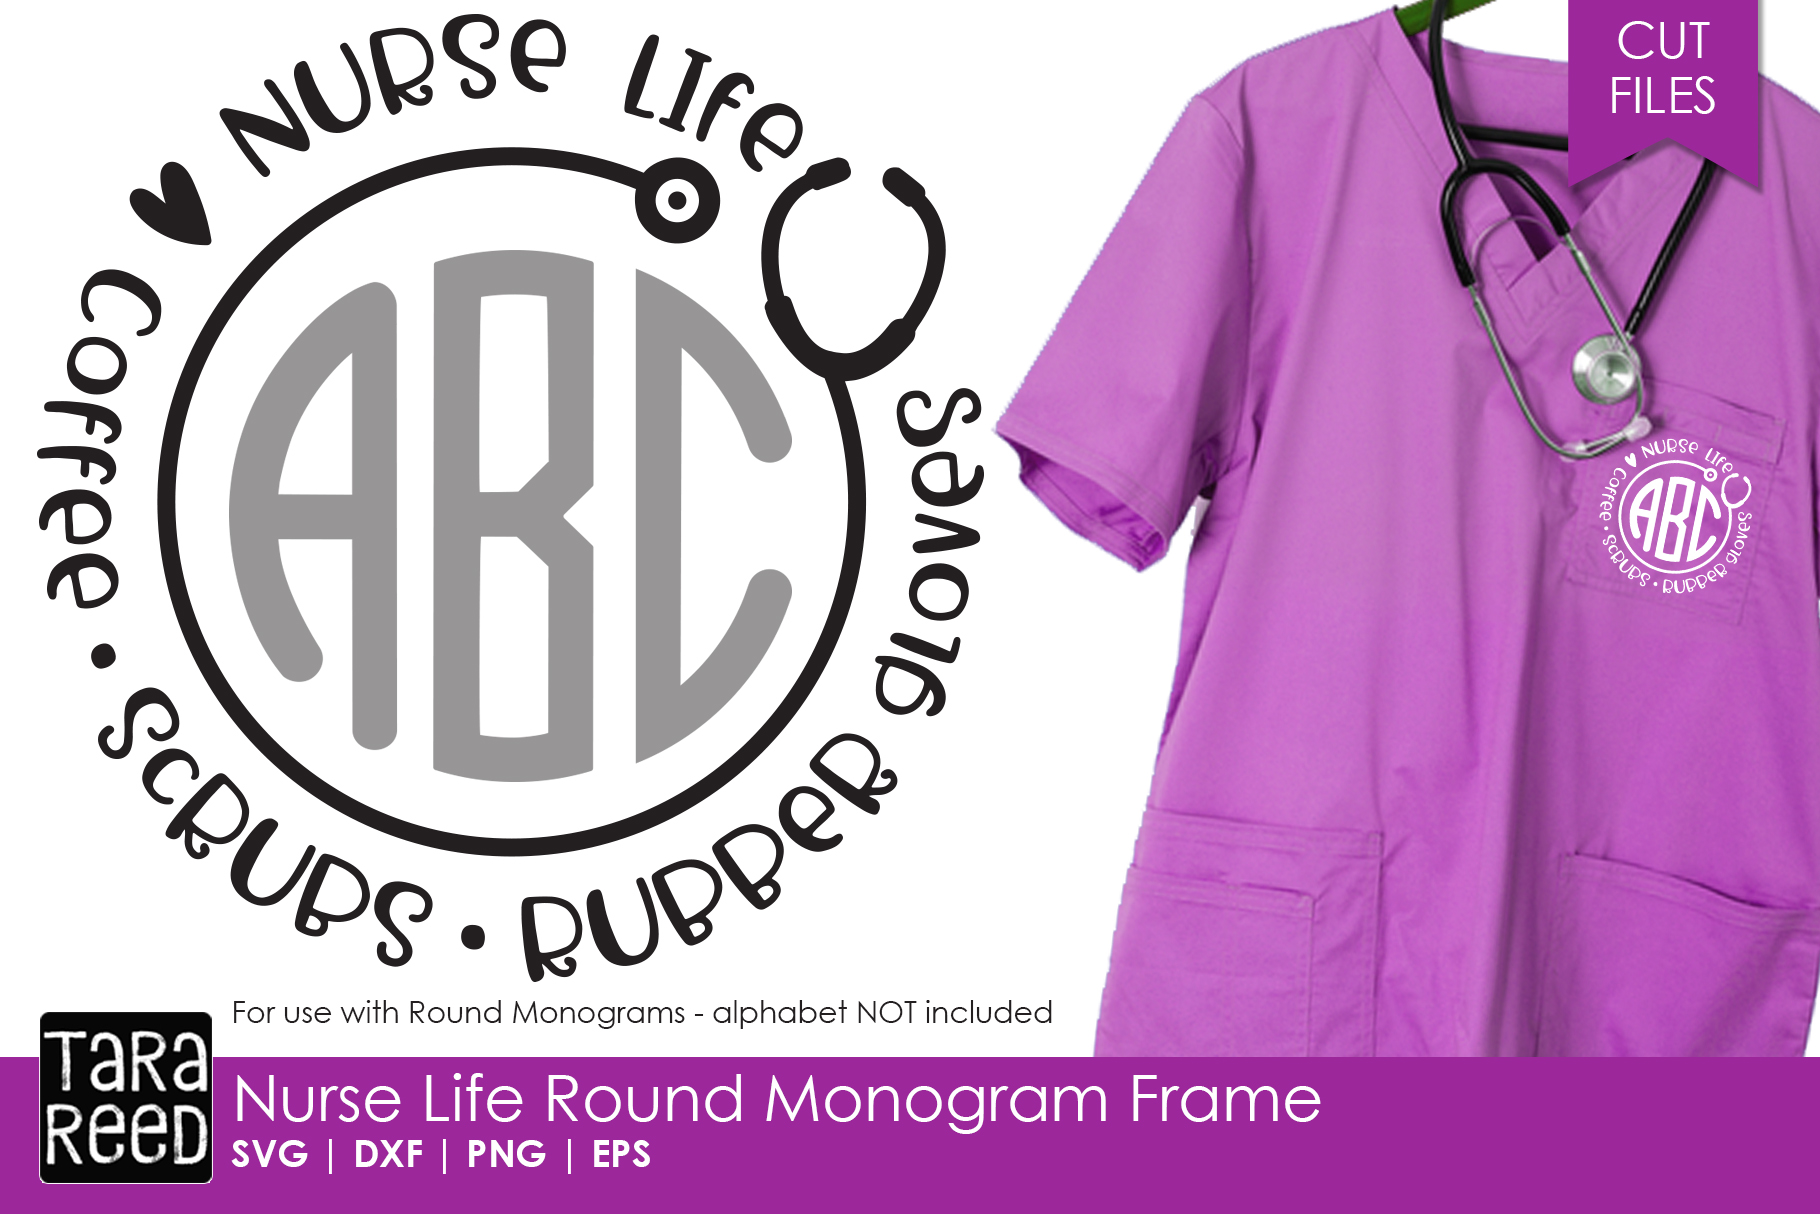 Download Nurse Life Round Monogram Frame - Nursing SVG and Cut Files (251421) | Cut Files | Design Bundles